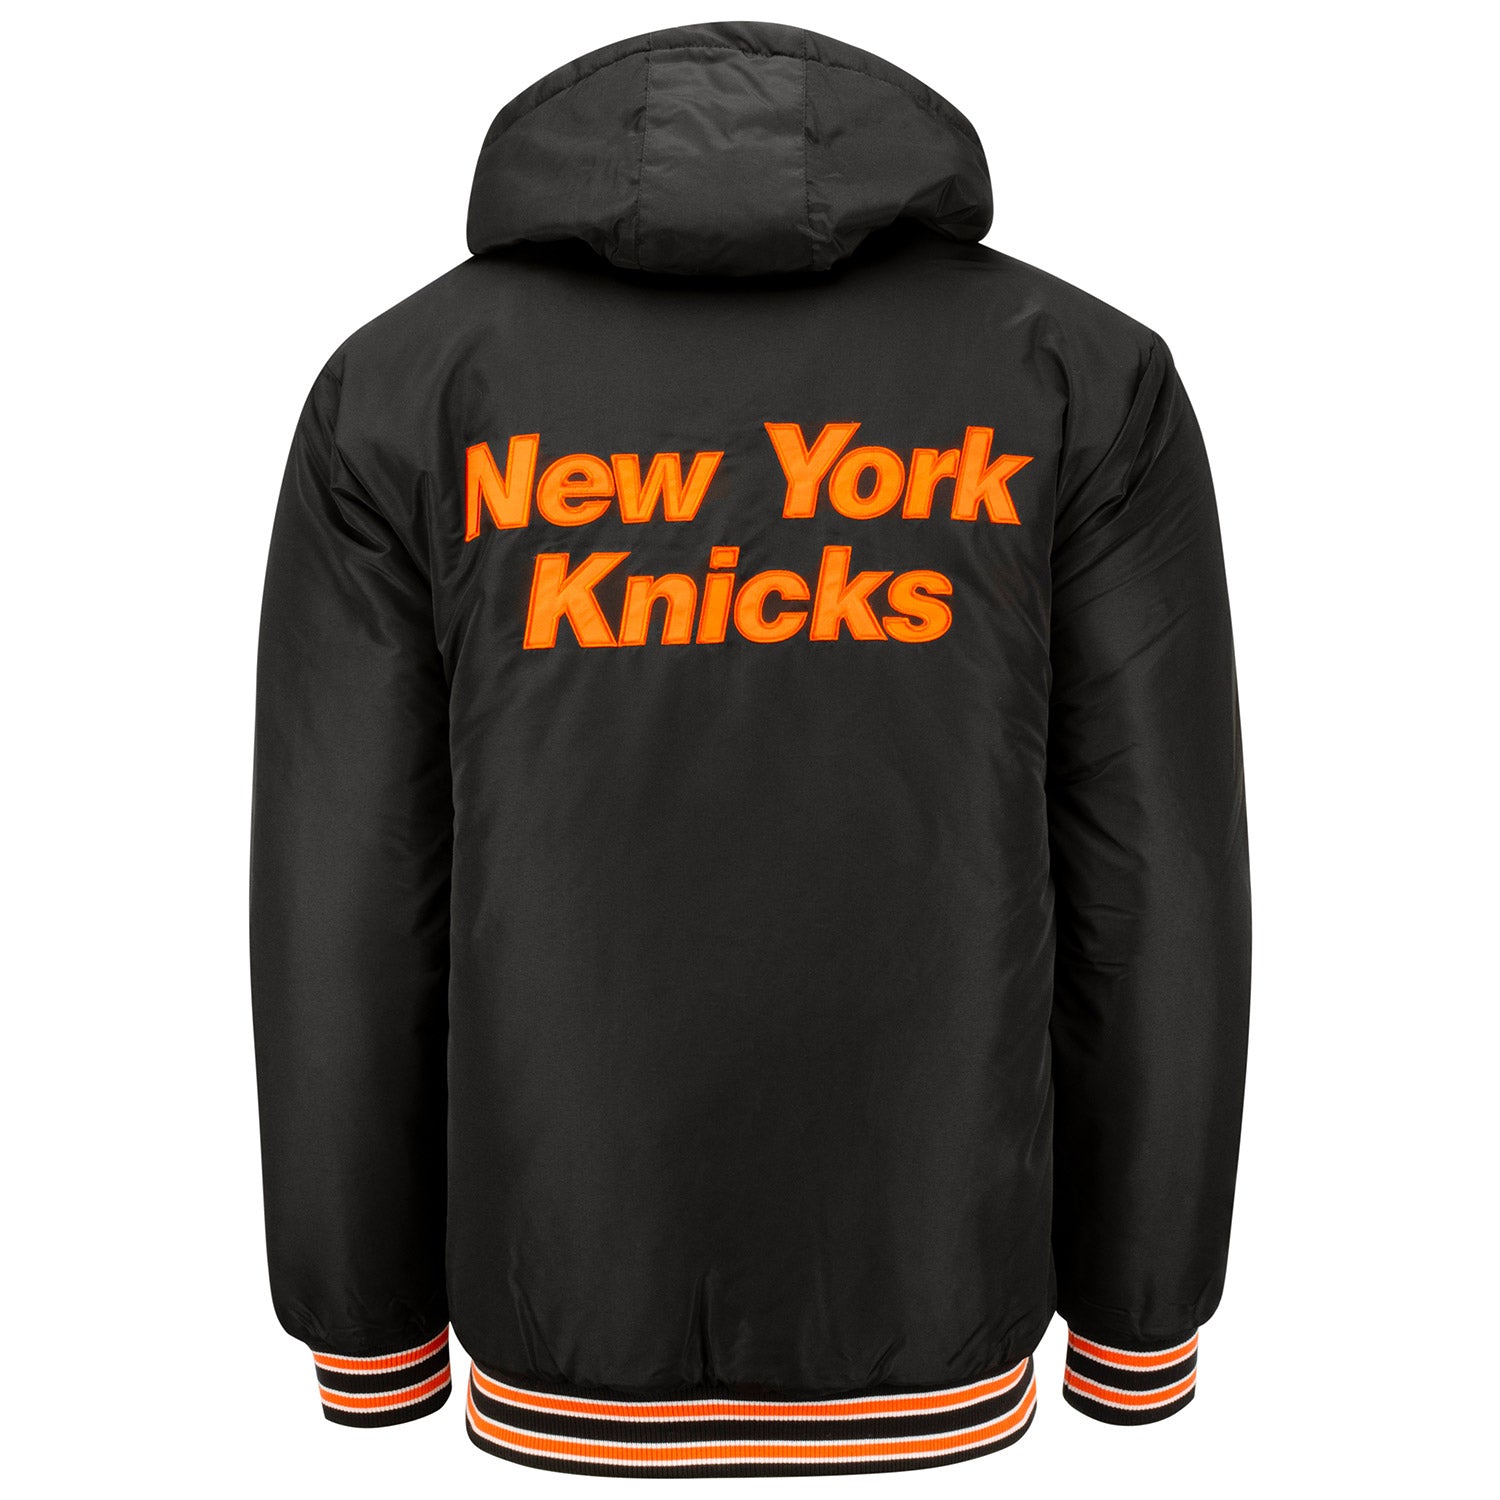 NY Knicks Unisex Bomber Jacket, L / Black